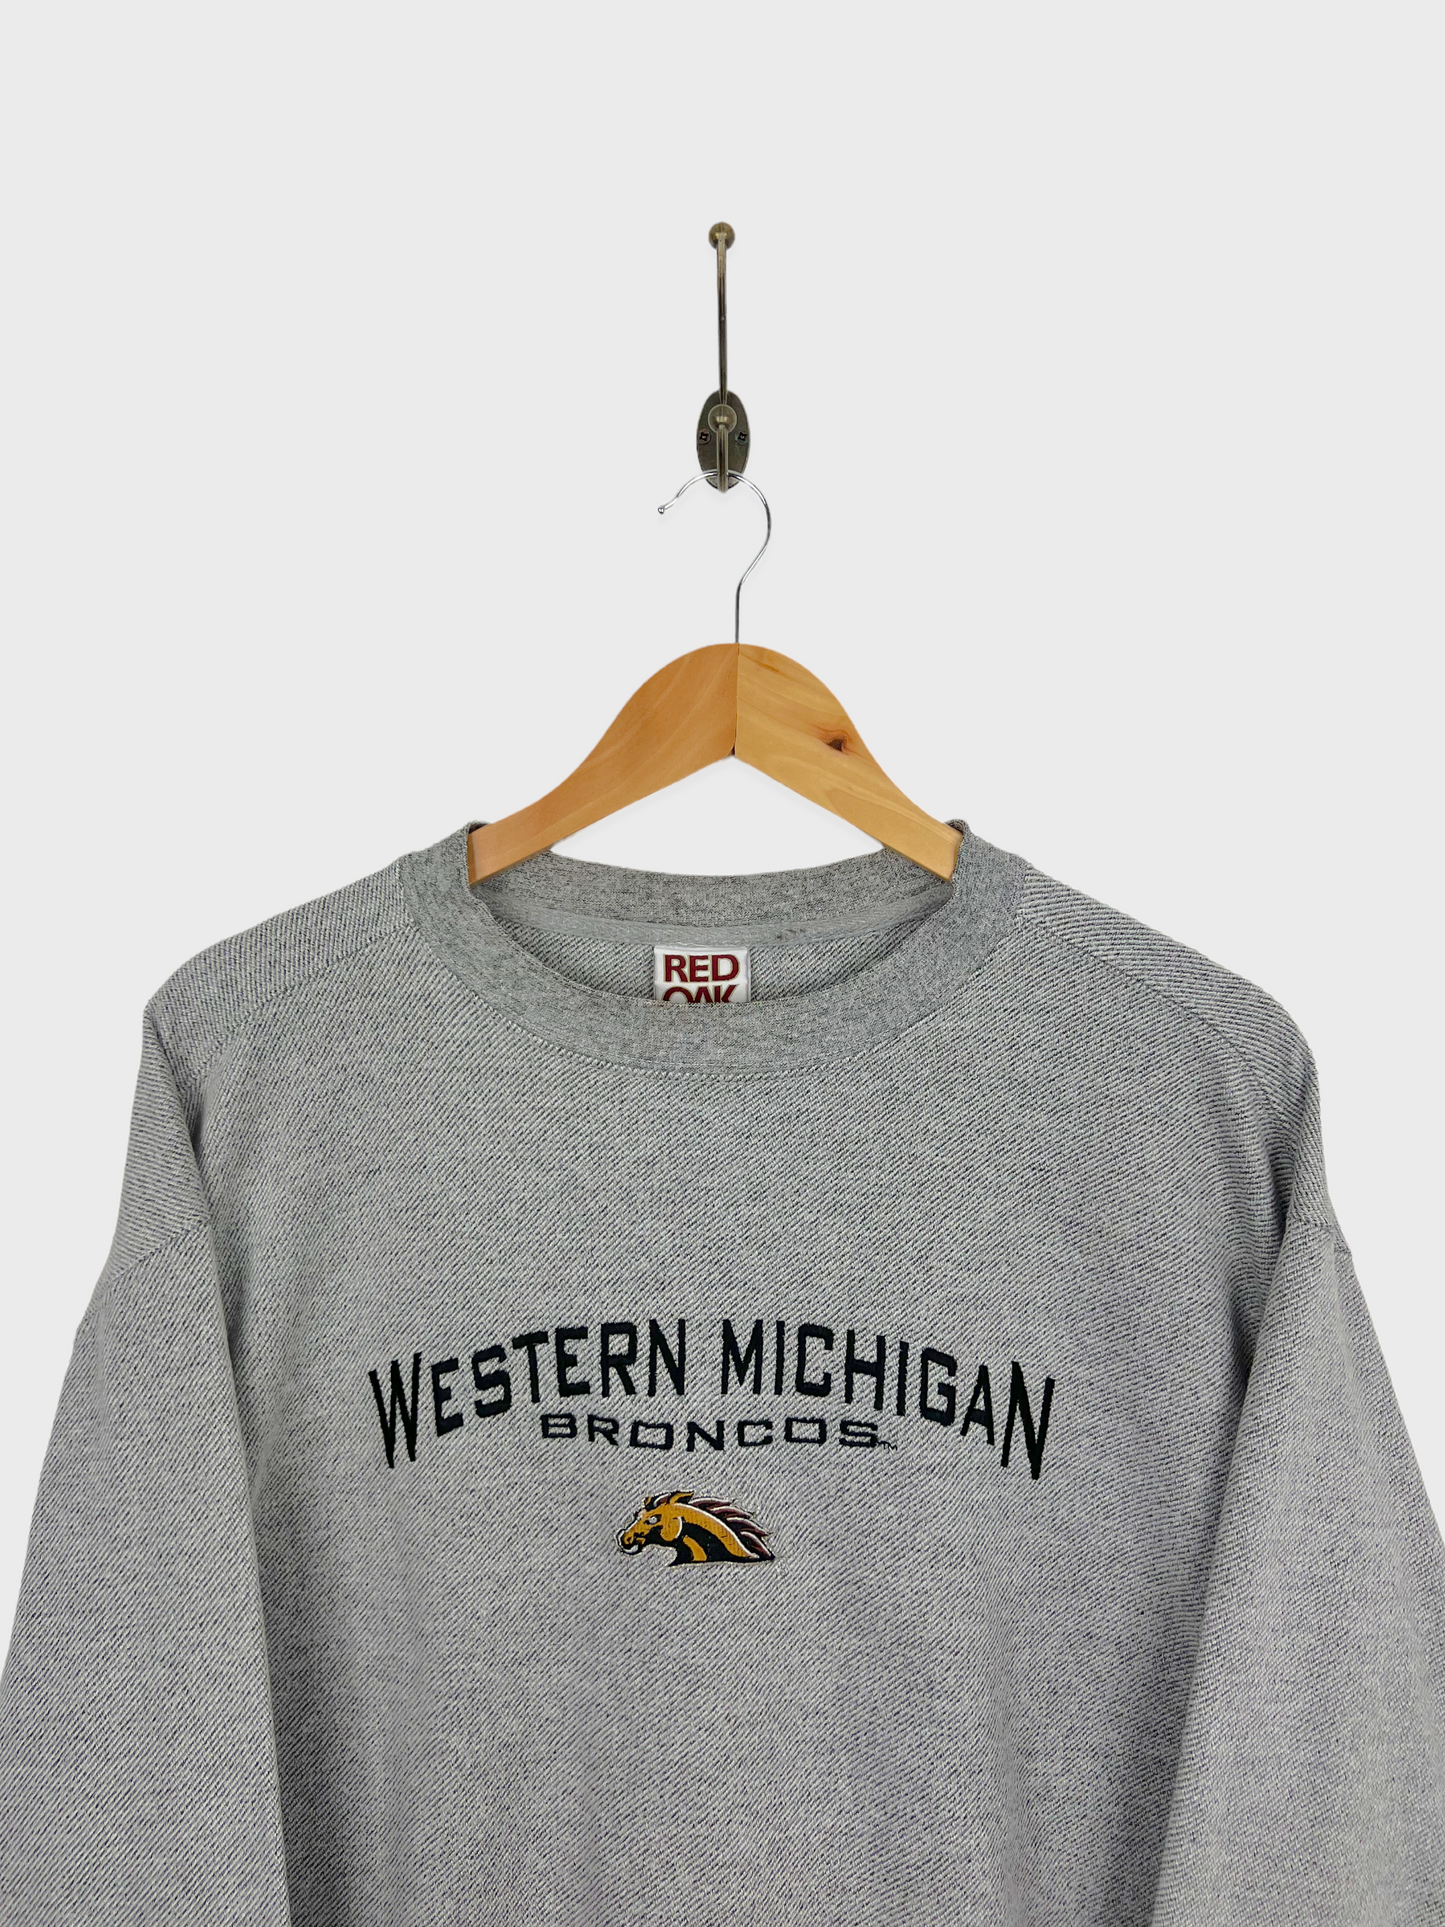 90's Western Michigan Broncos Embroidered Vintage Sweatshirt Size M-L